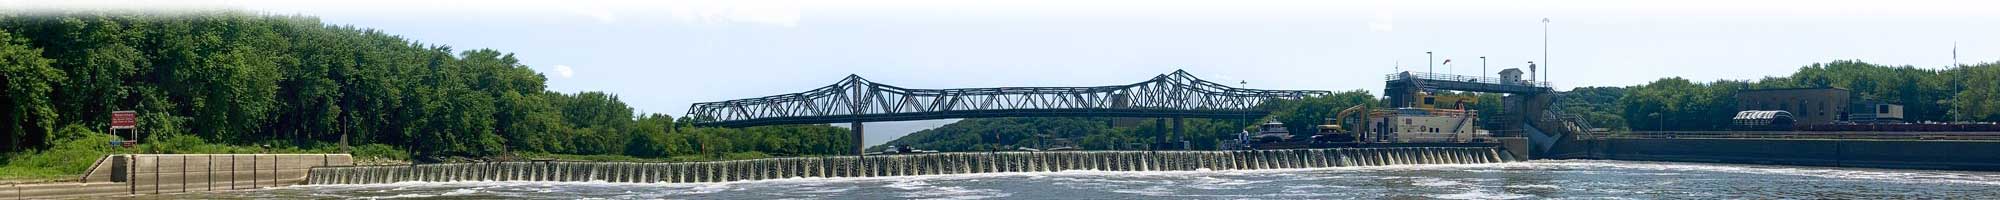 Illinois River with dam and bridge